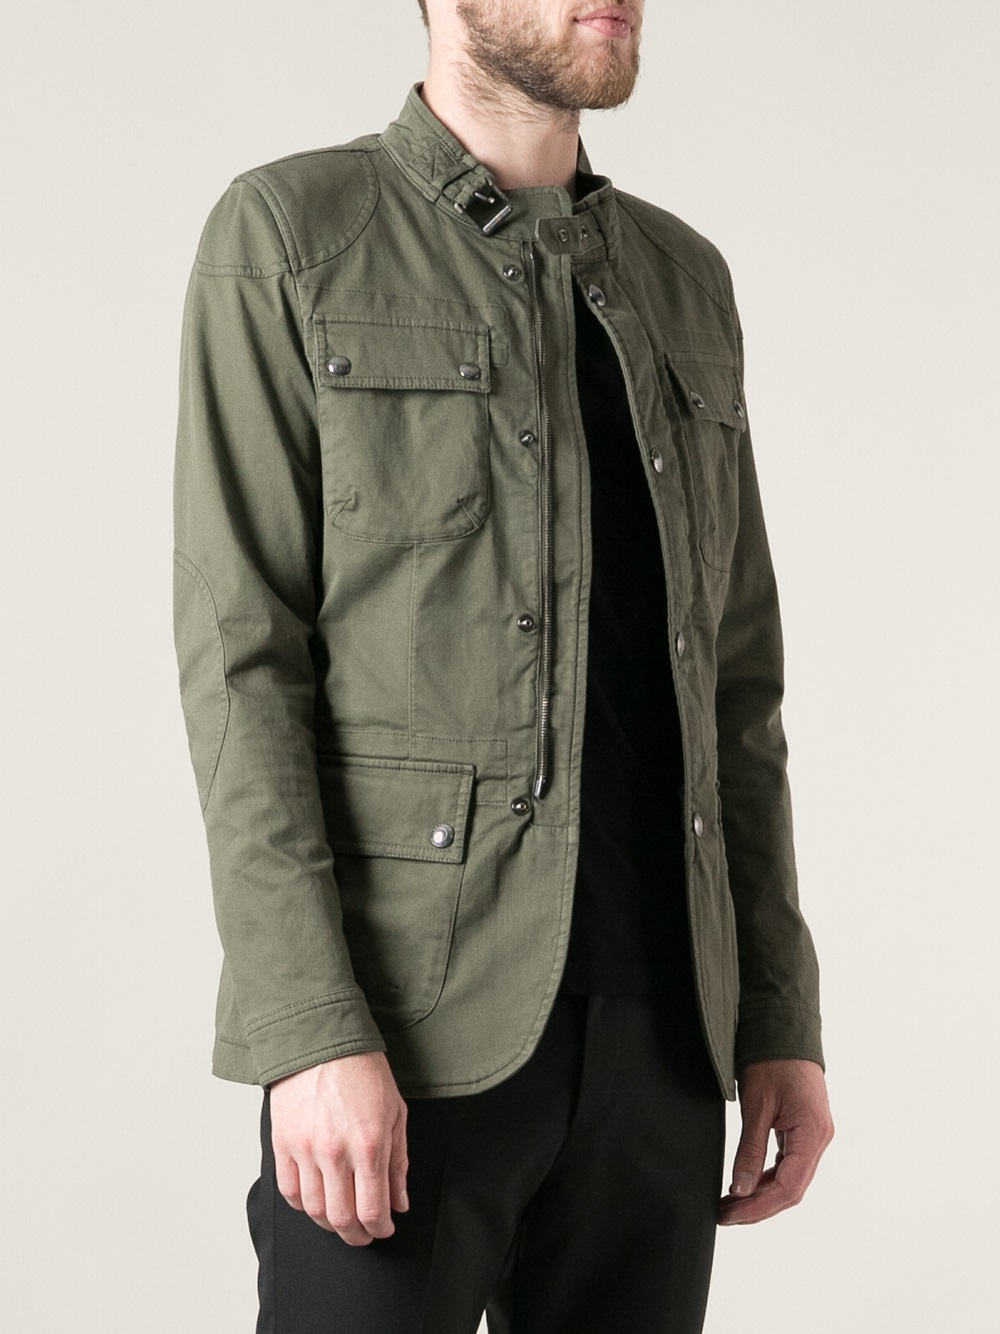 Belstaff Military Jacket in Green for Men - Lyst